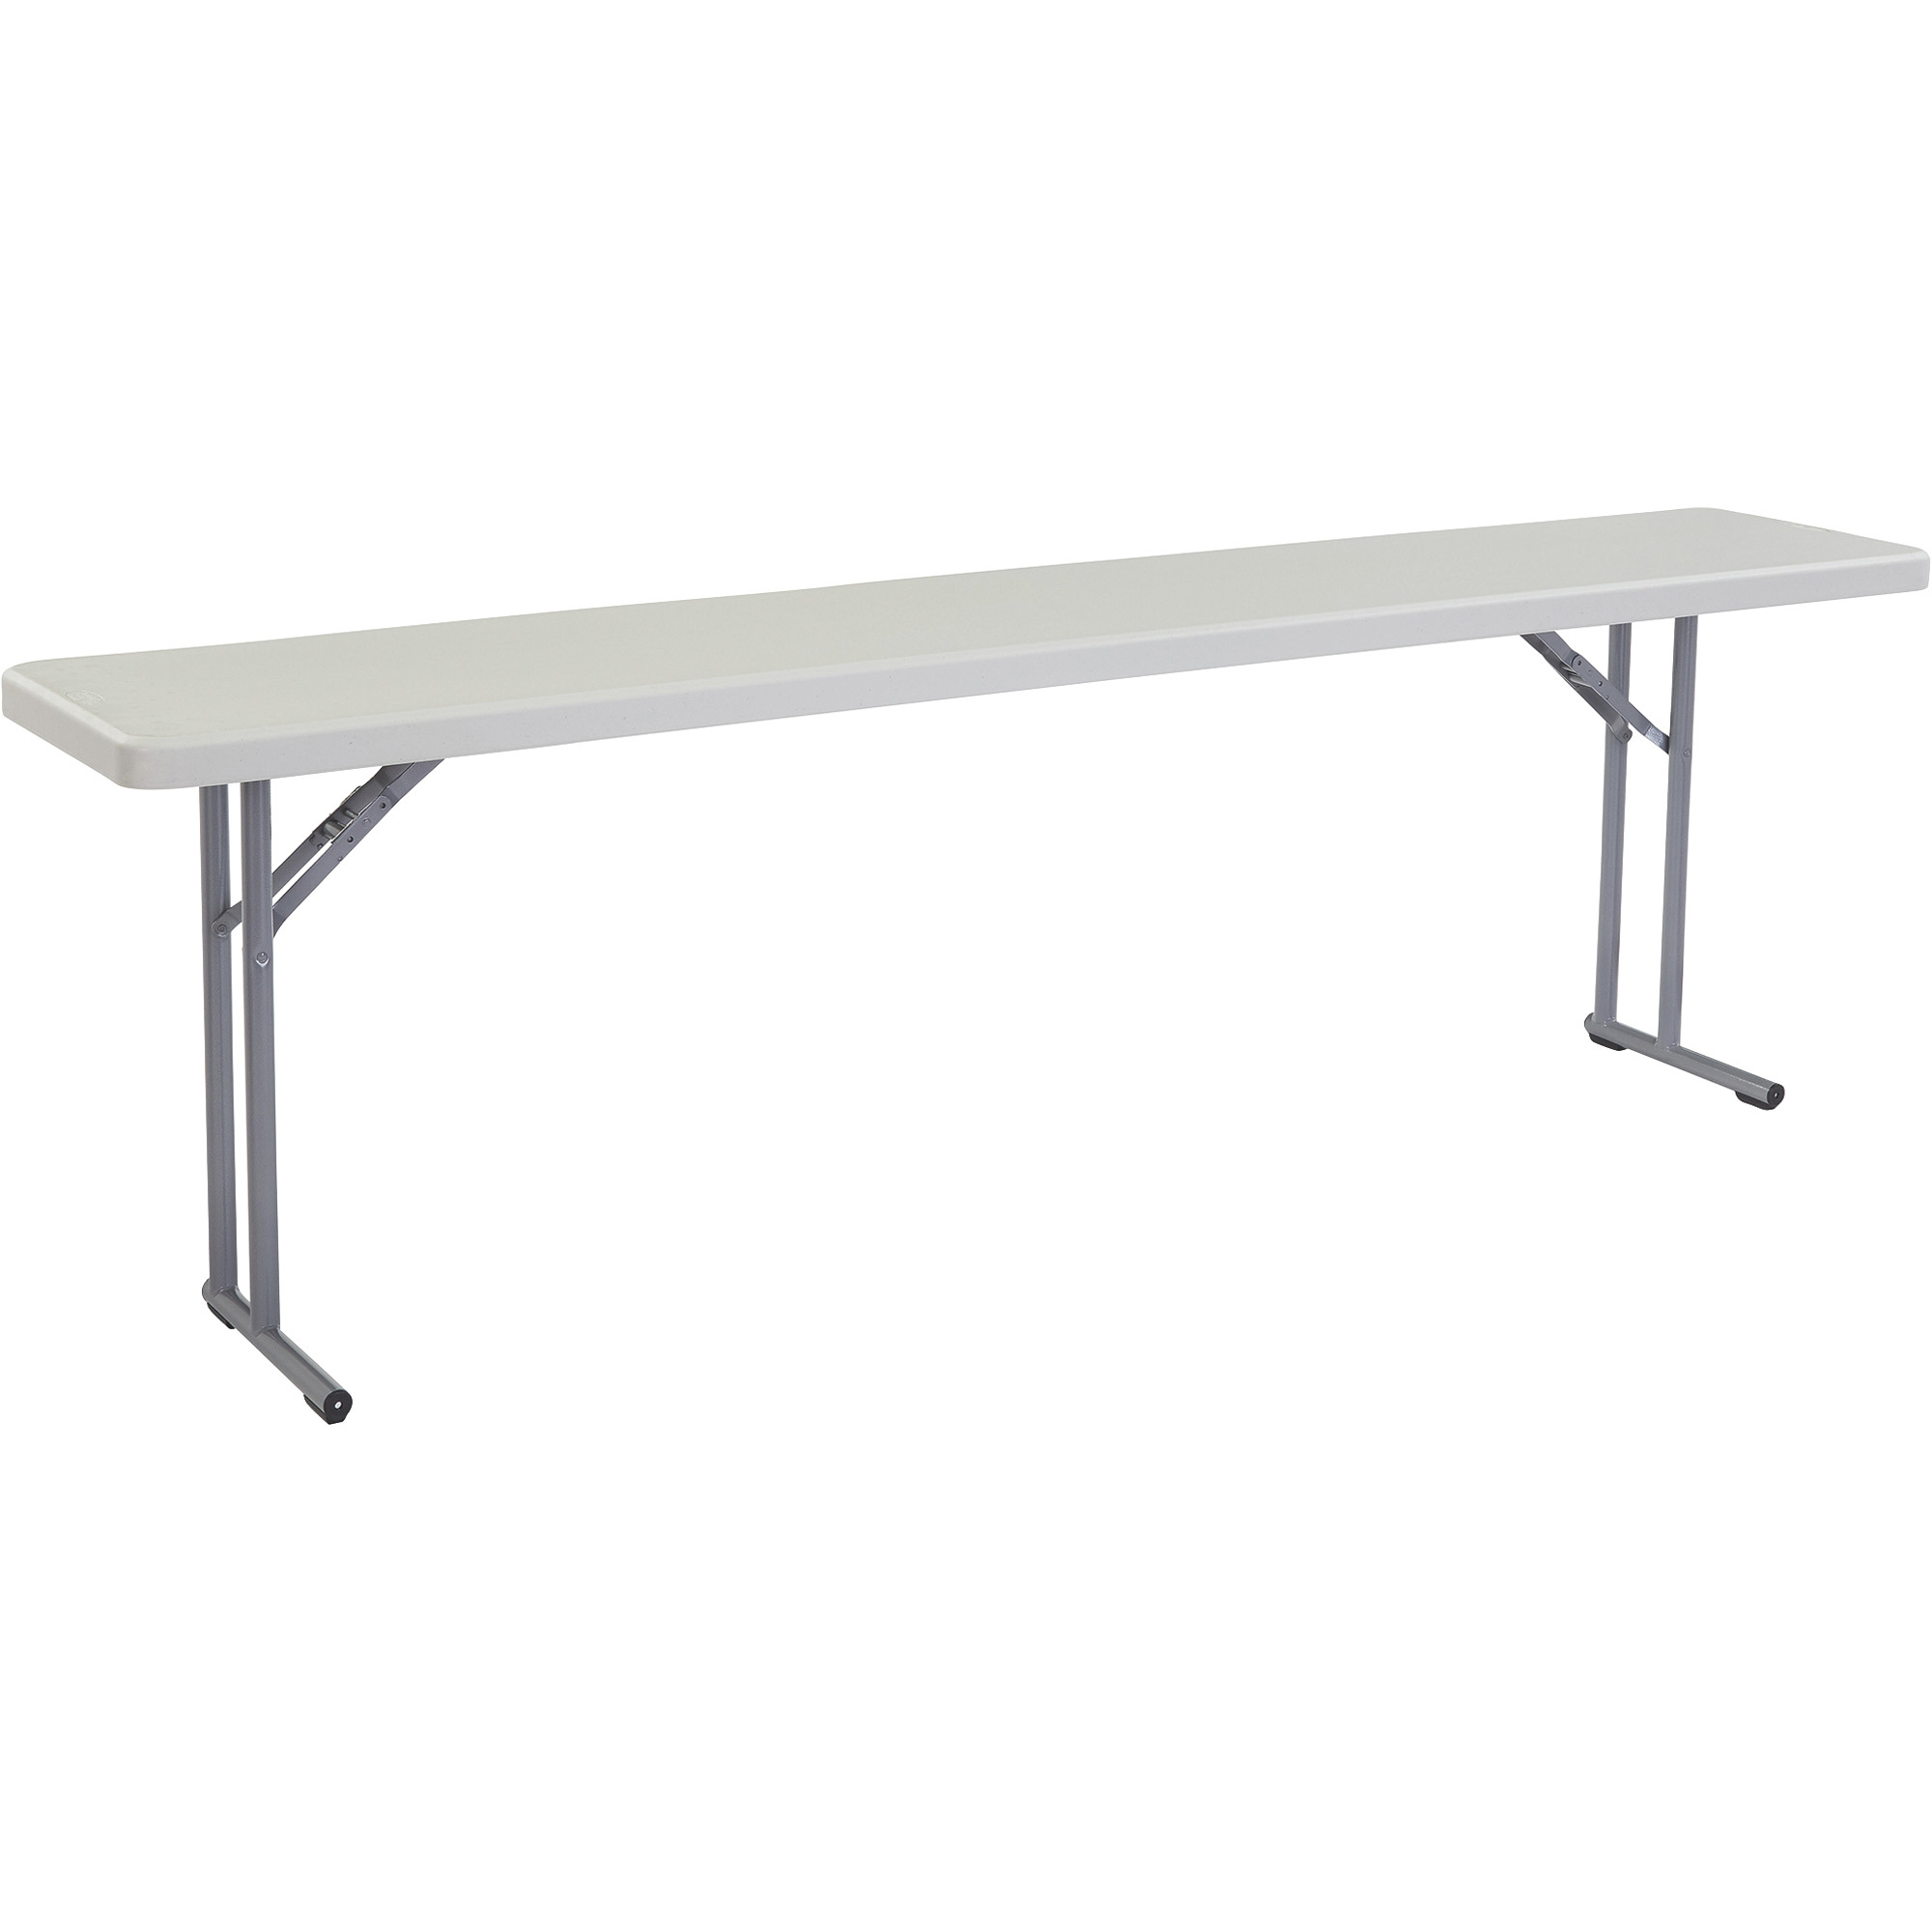 National Public Seating Plastic Folding Table â 18Inch W x 96Inch L, Model BT1896